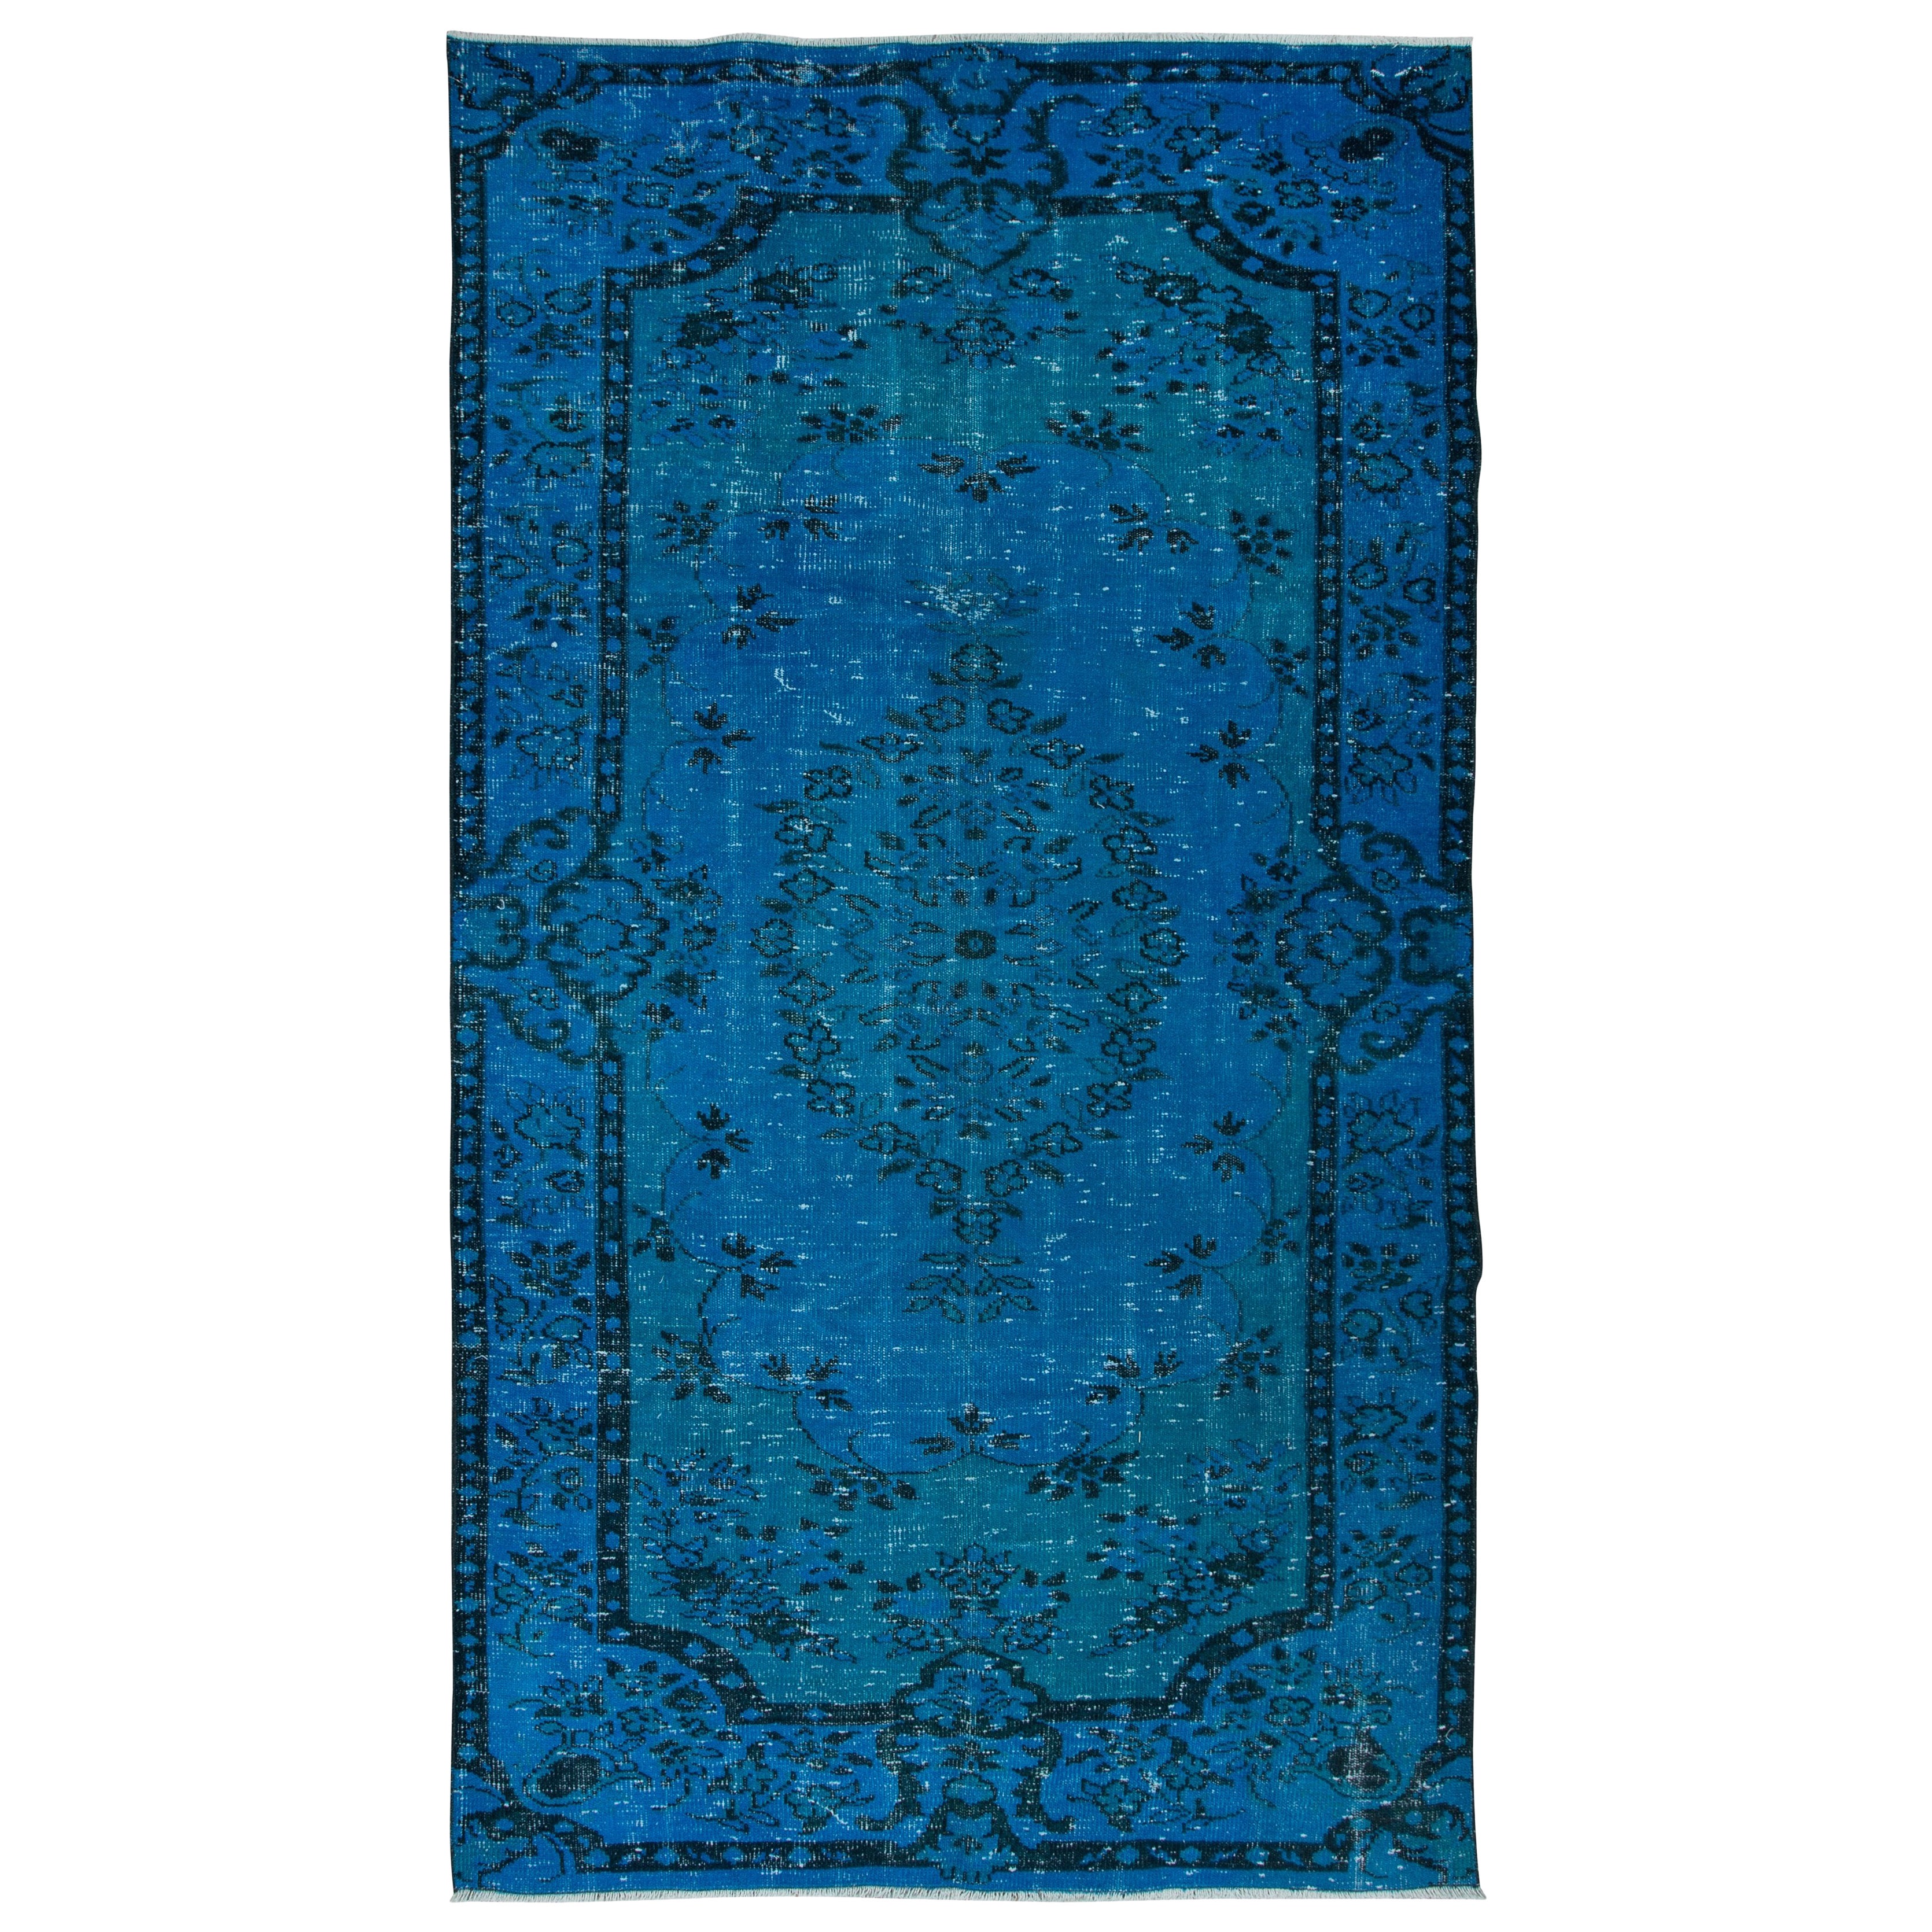 5.3x9.2 Ft Blue Handmade Turkish Rug for Living Room, Bedroom, Dining Room